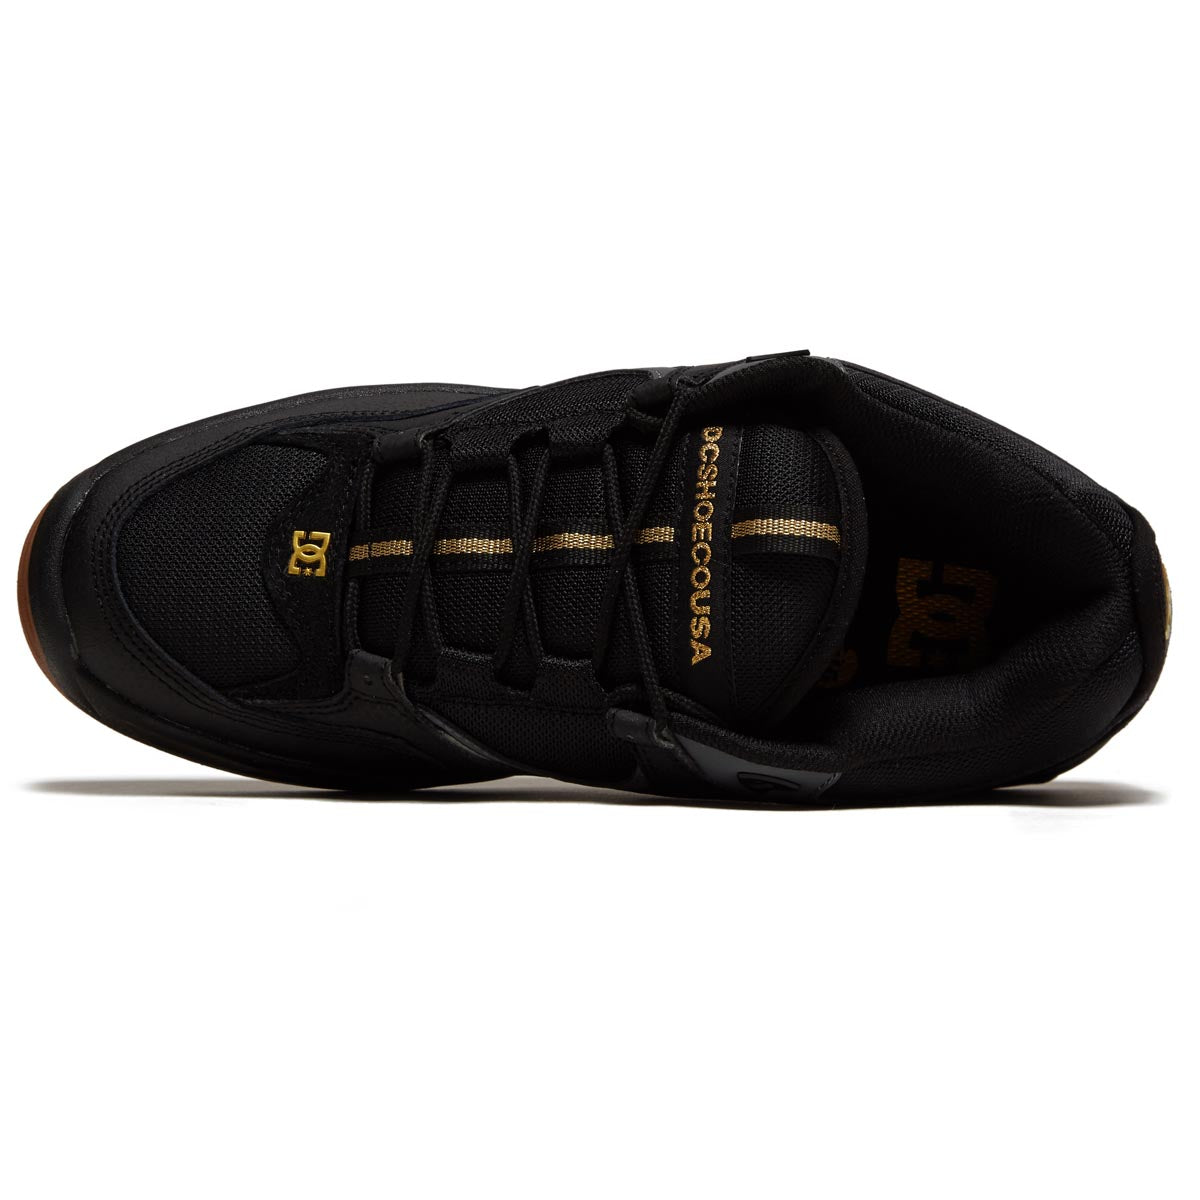 DC Kalynx Zero Shoes - Black/Gold image 3